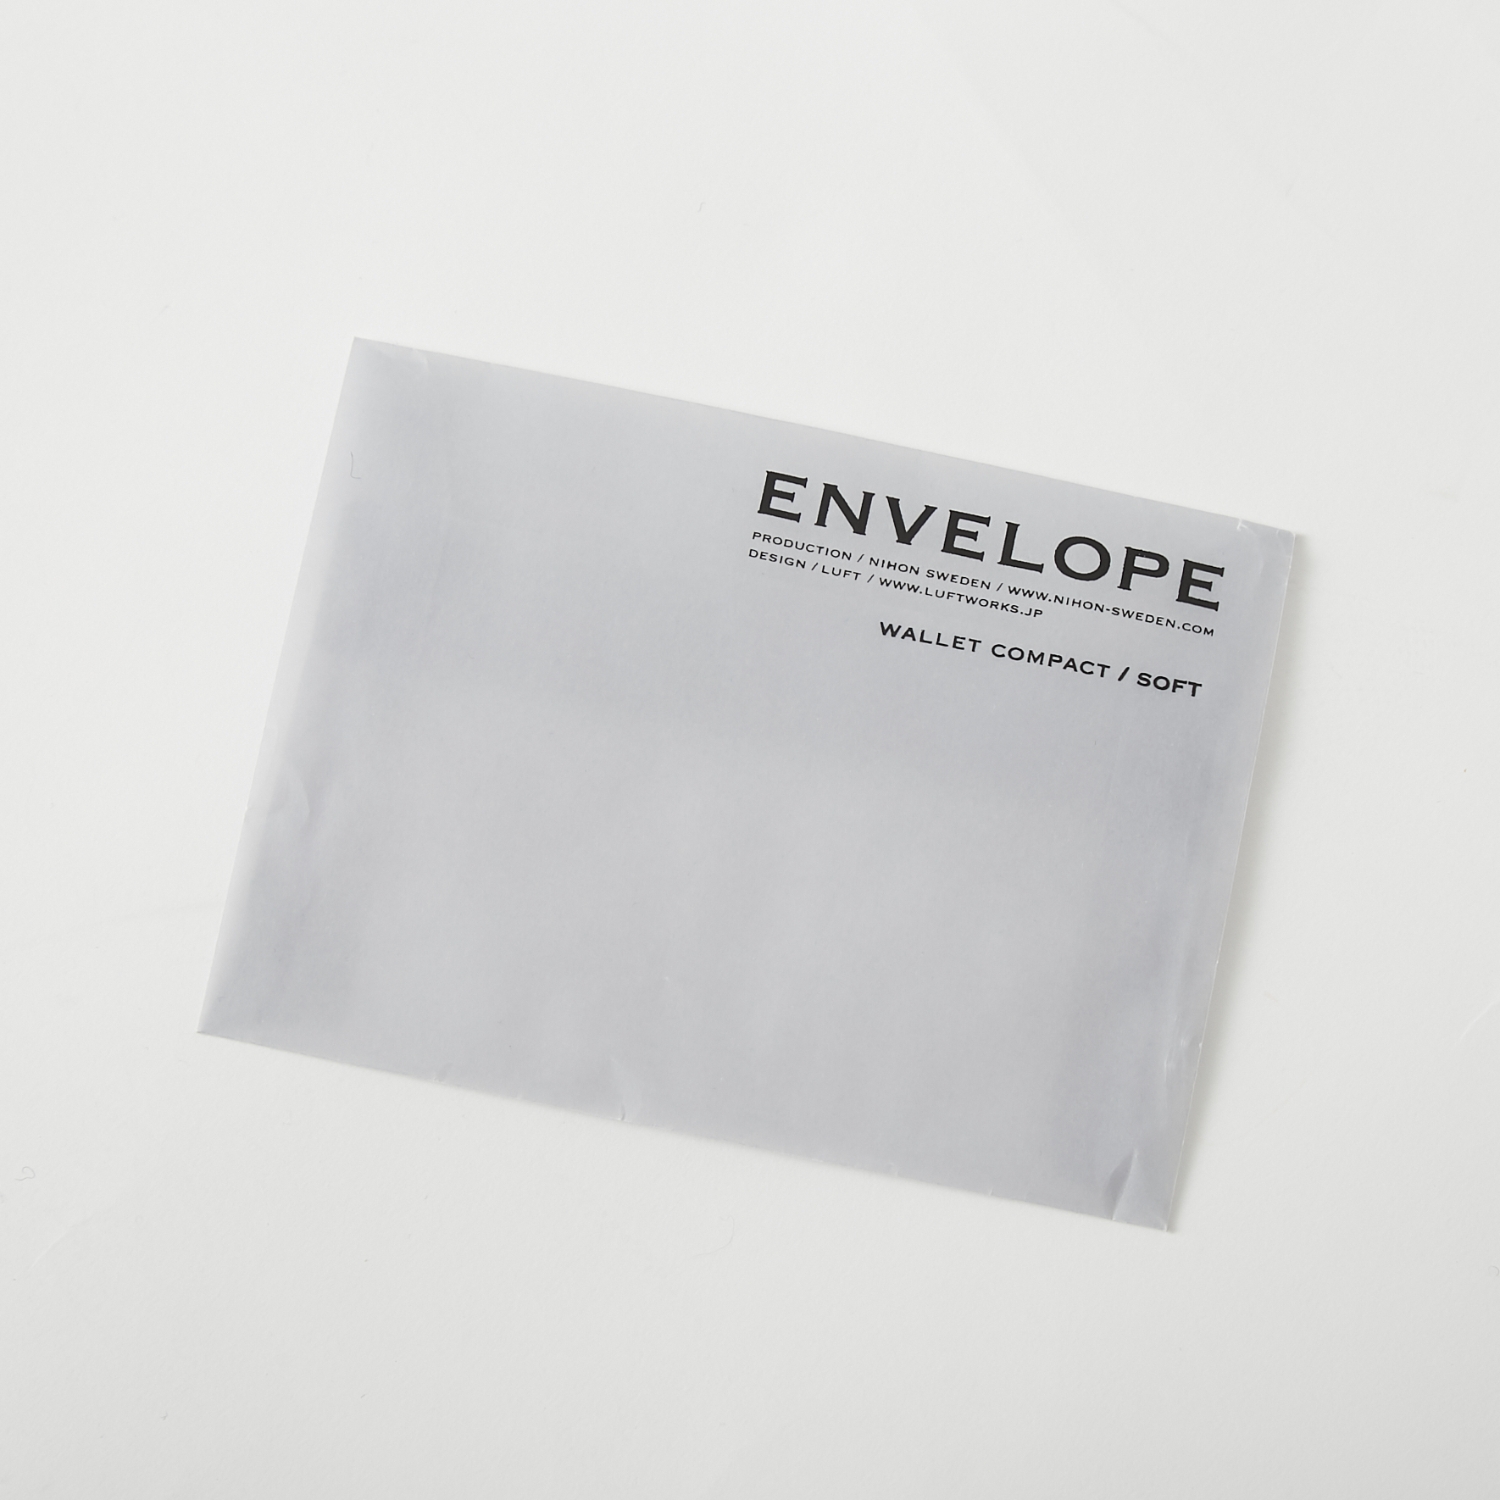 ENVELOPE WALLET COMPACT/SOFT